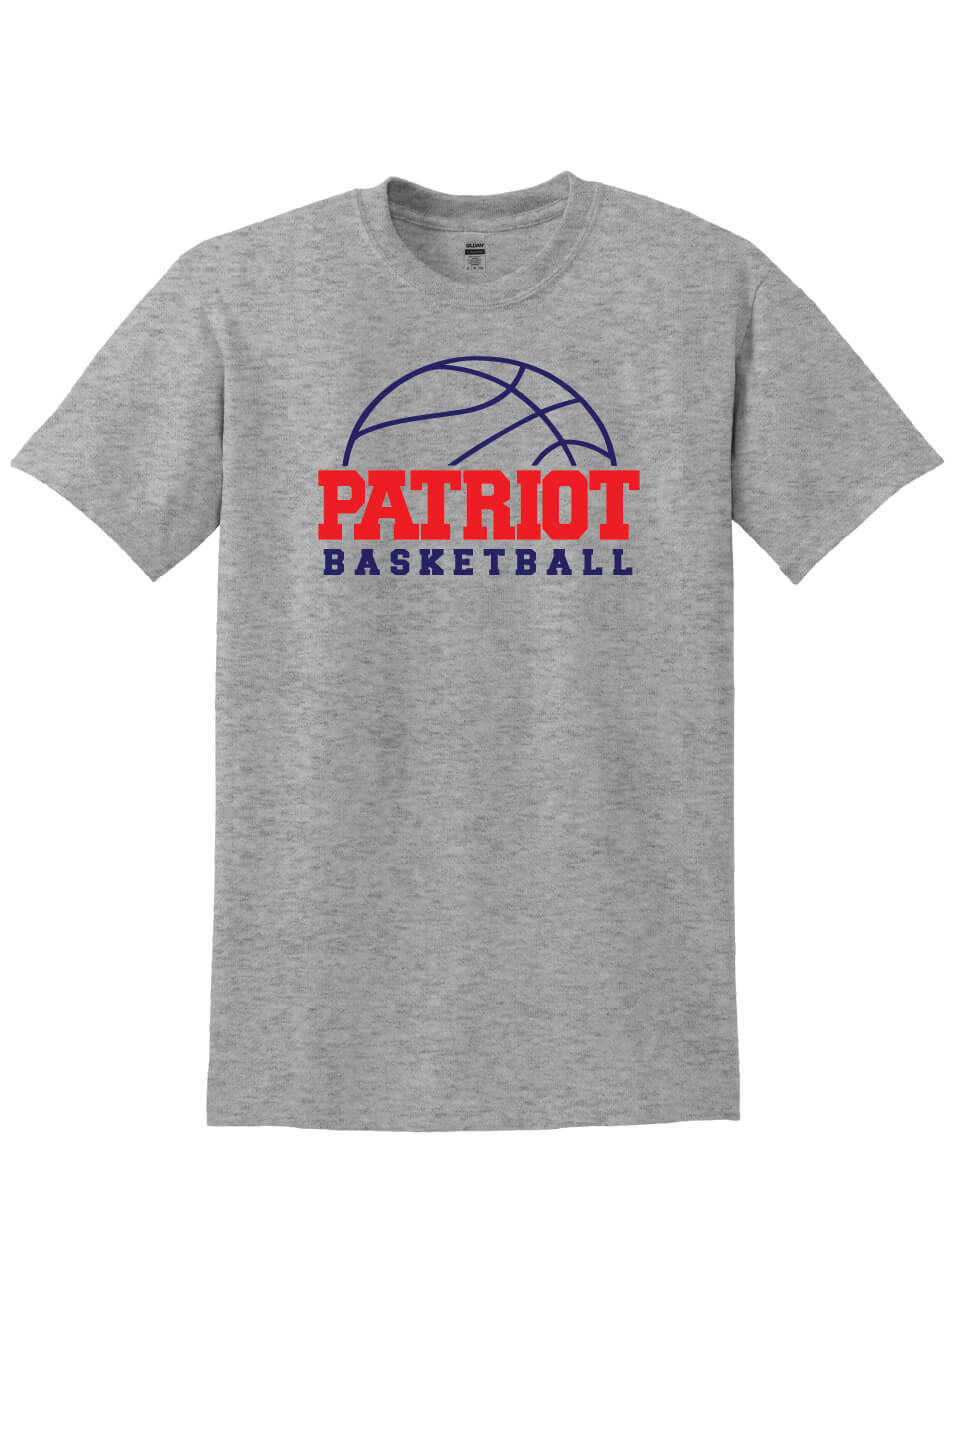 Patriot Basketball Short Sleeve T-Shirt (Youth) gray